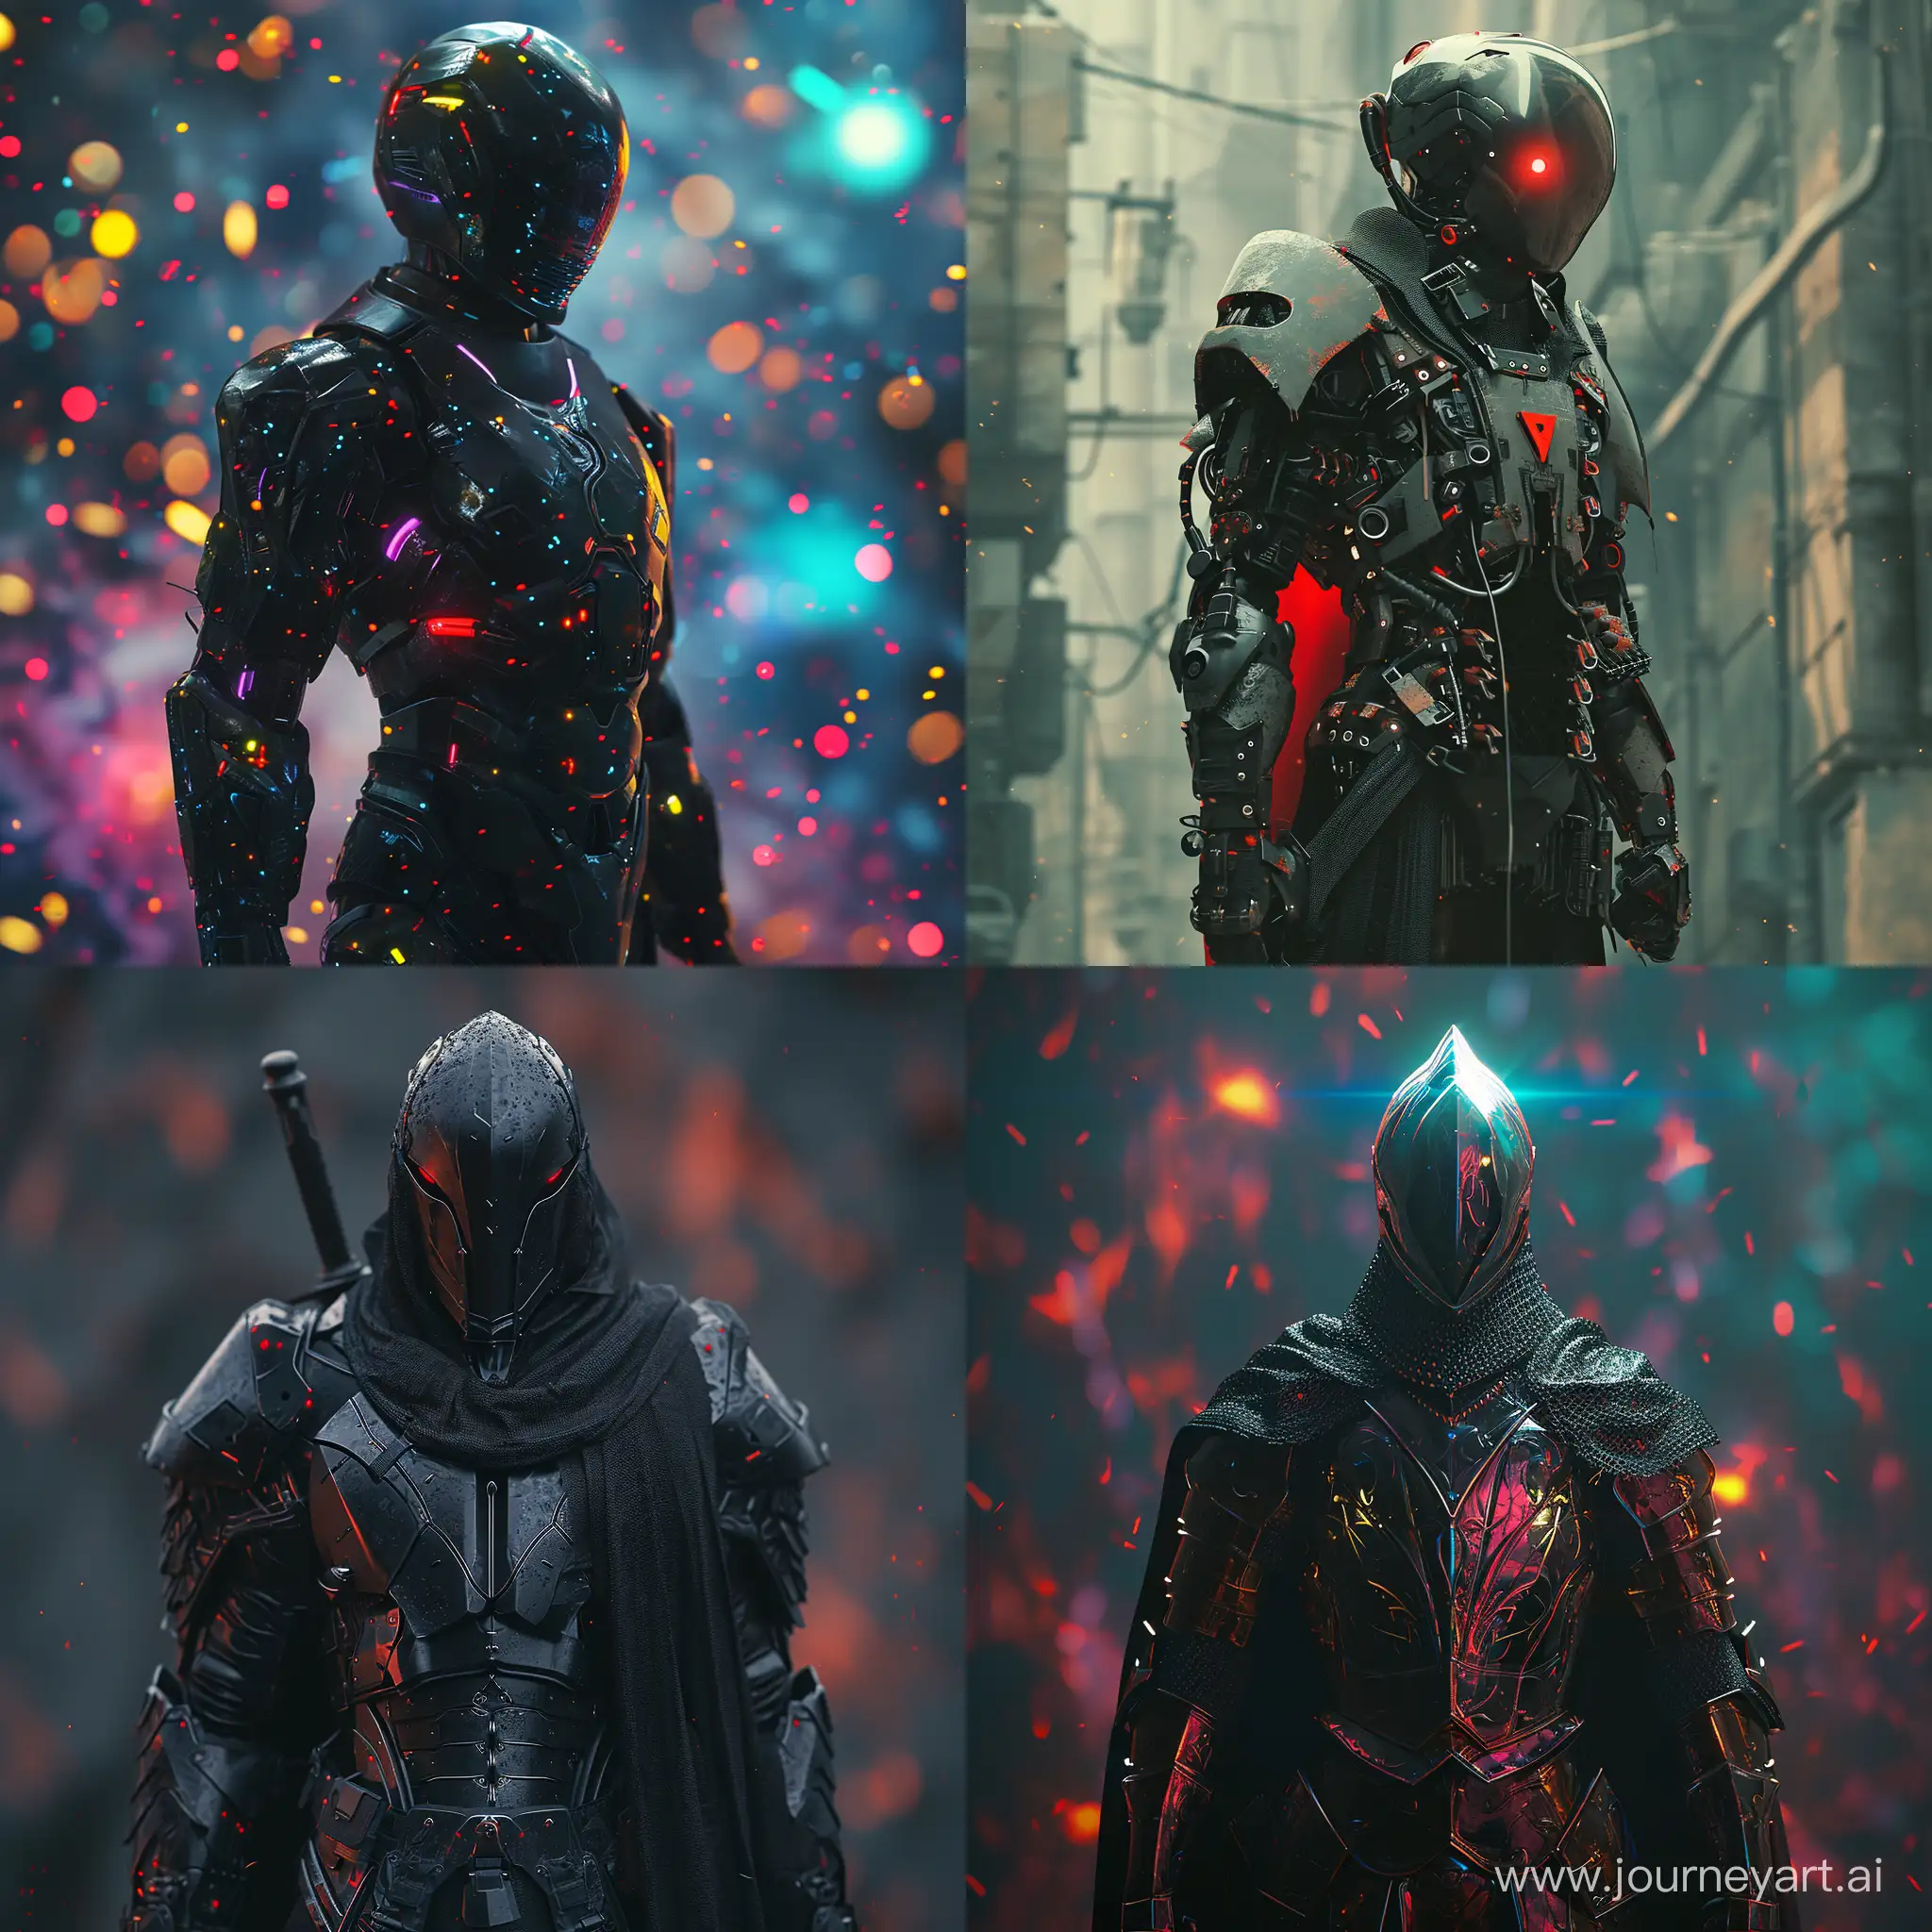 Epic-Cyberpunk-Black-Knight-in-Vibrant-8K-Explosion